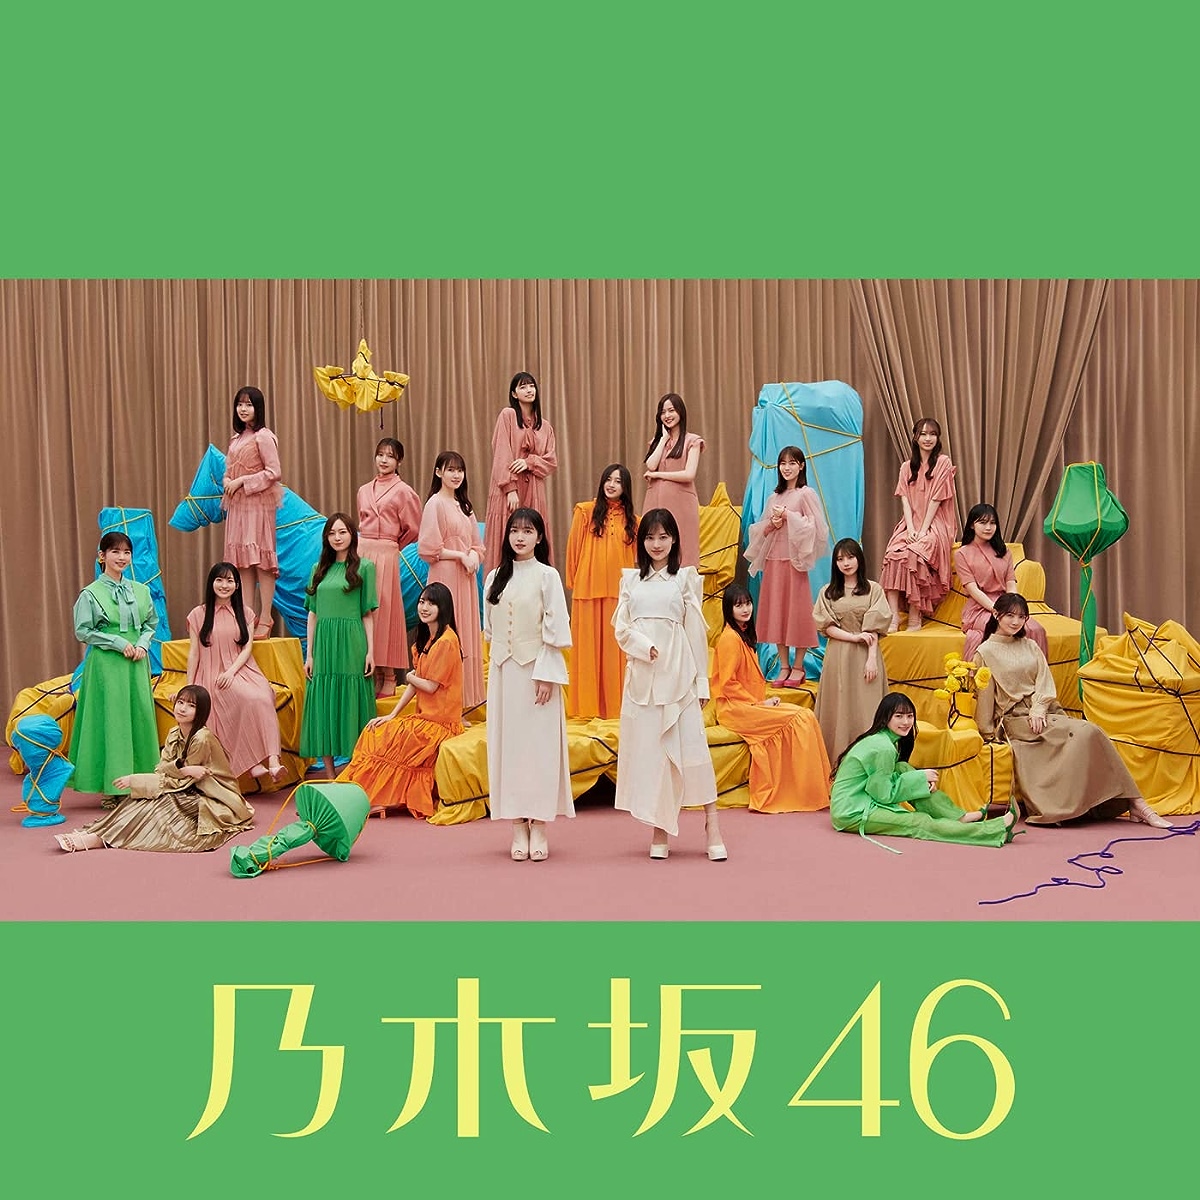 Nogizaka46 - hitowayumeonidomiru Cover